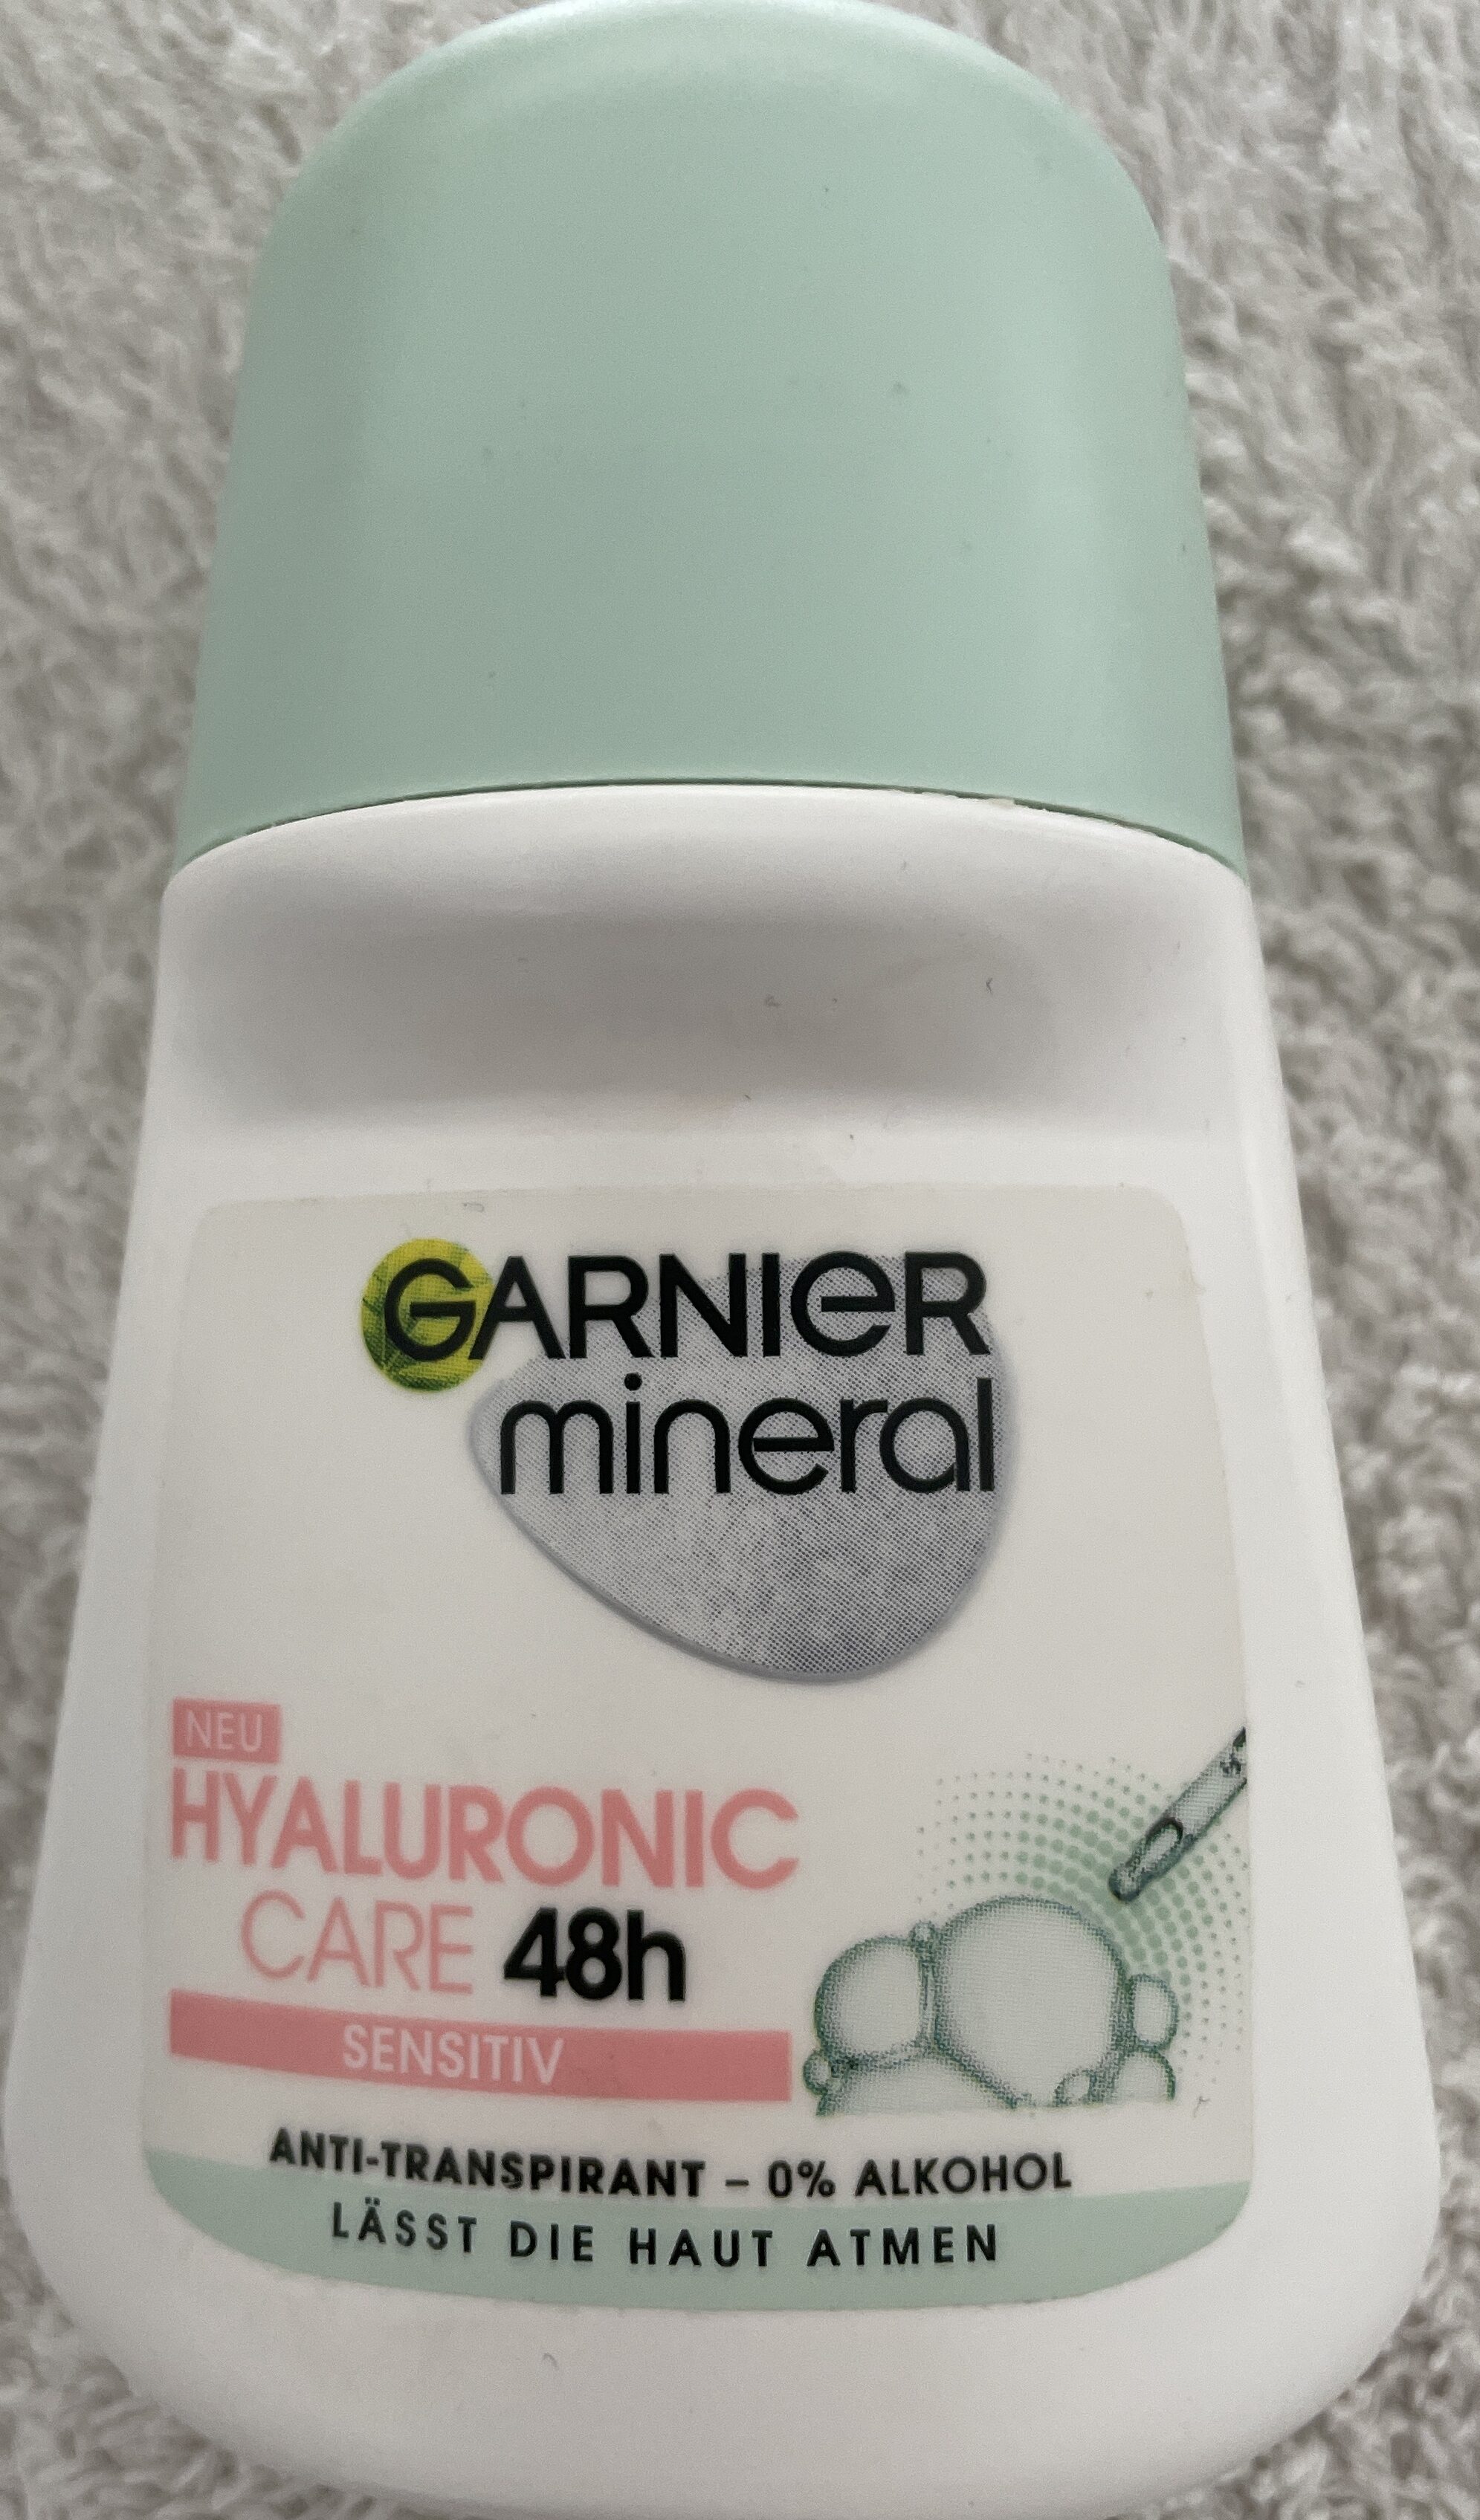 Hyaluronic Care 48h Sensitiv - Product - de